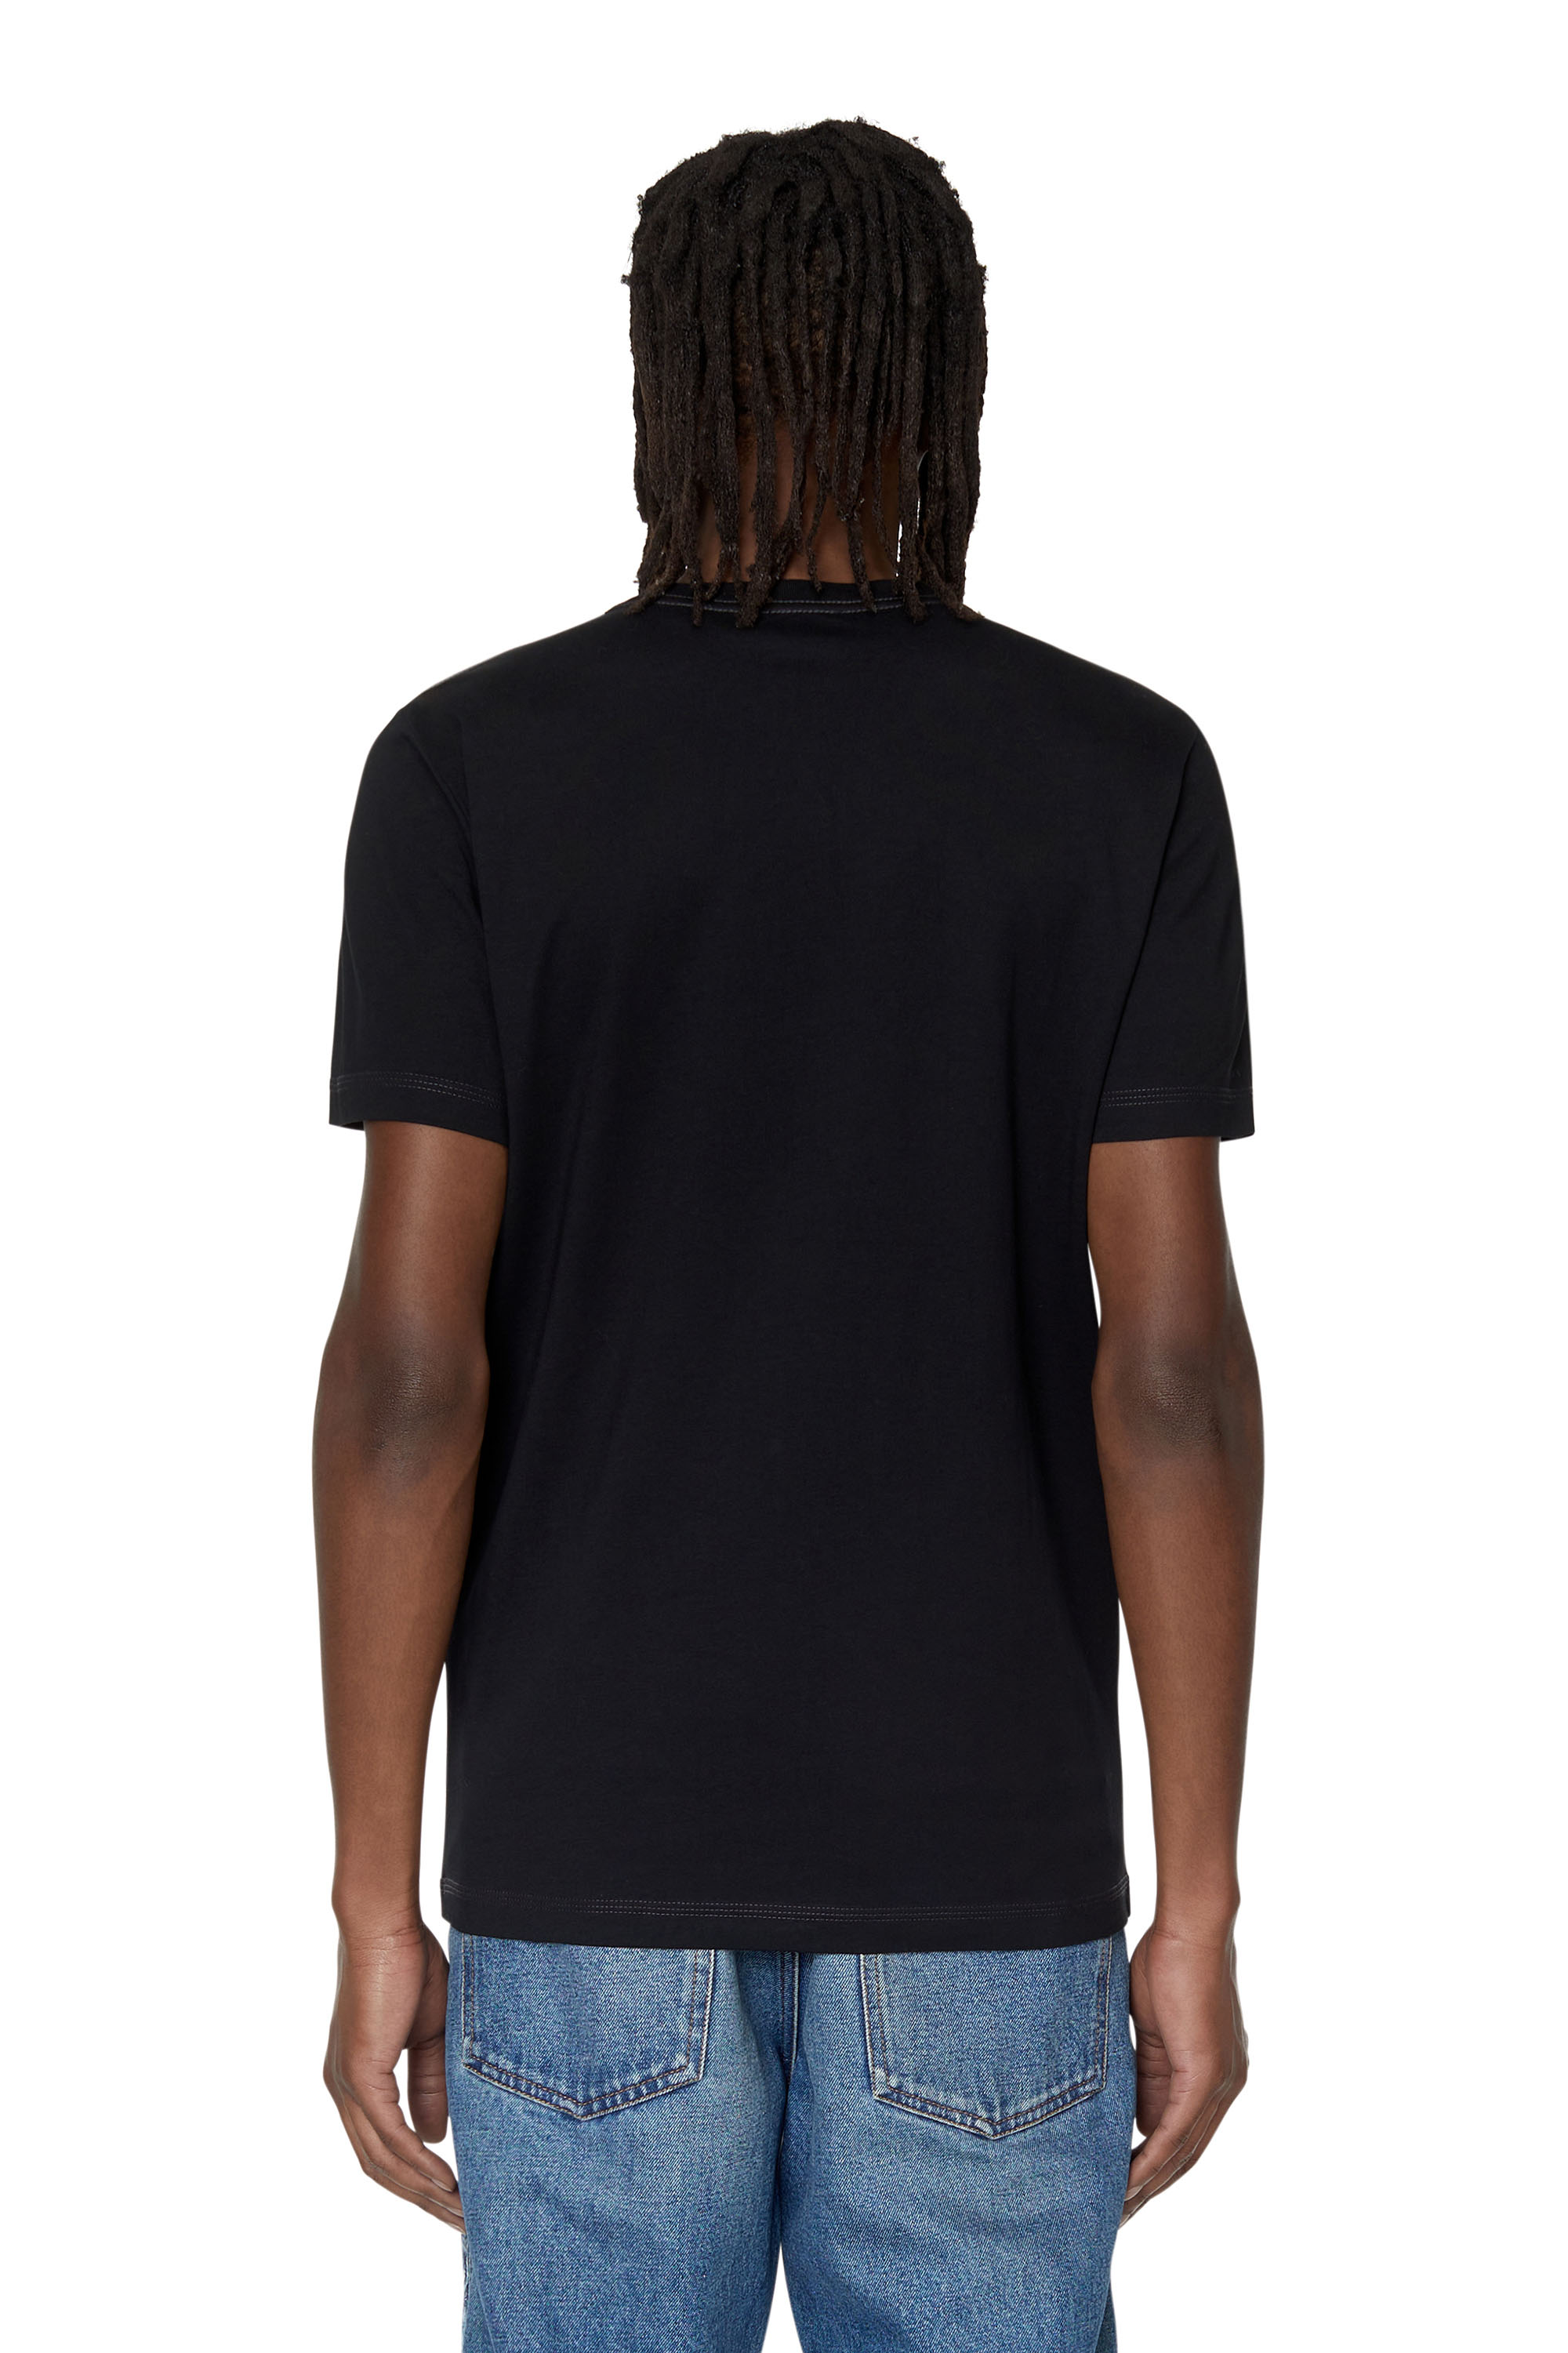 Men's T-Shirt Sale: Solid color, printed t-shirts | Diesel